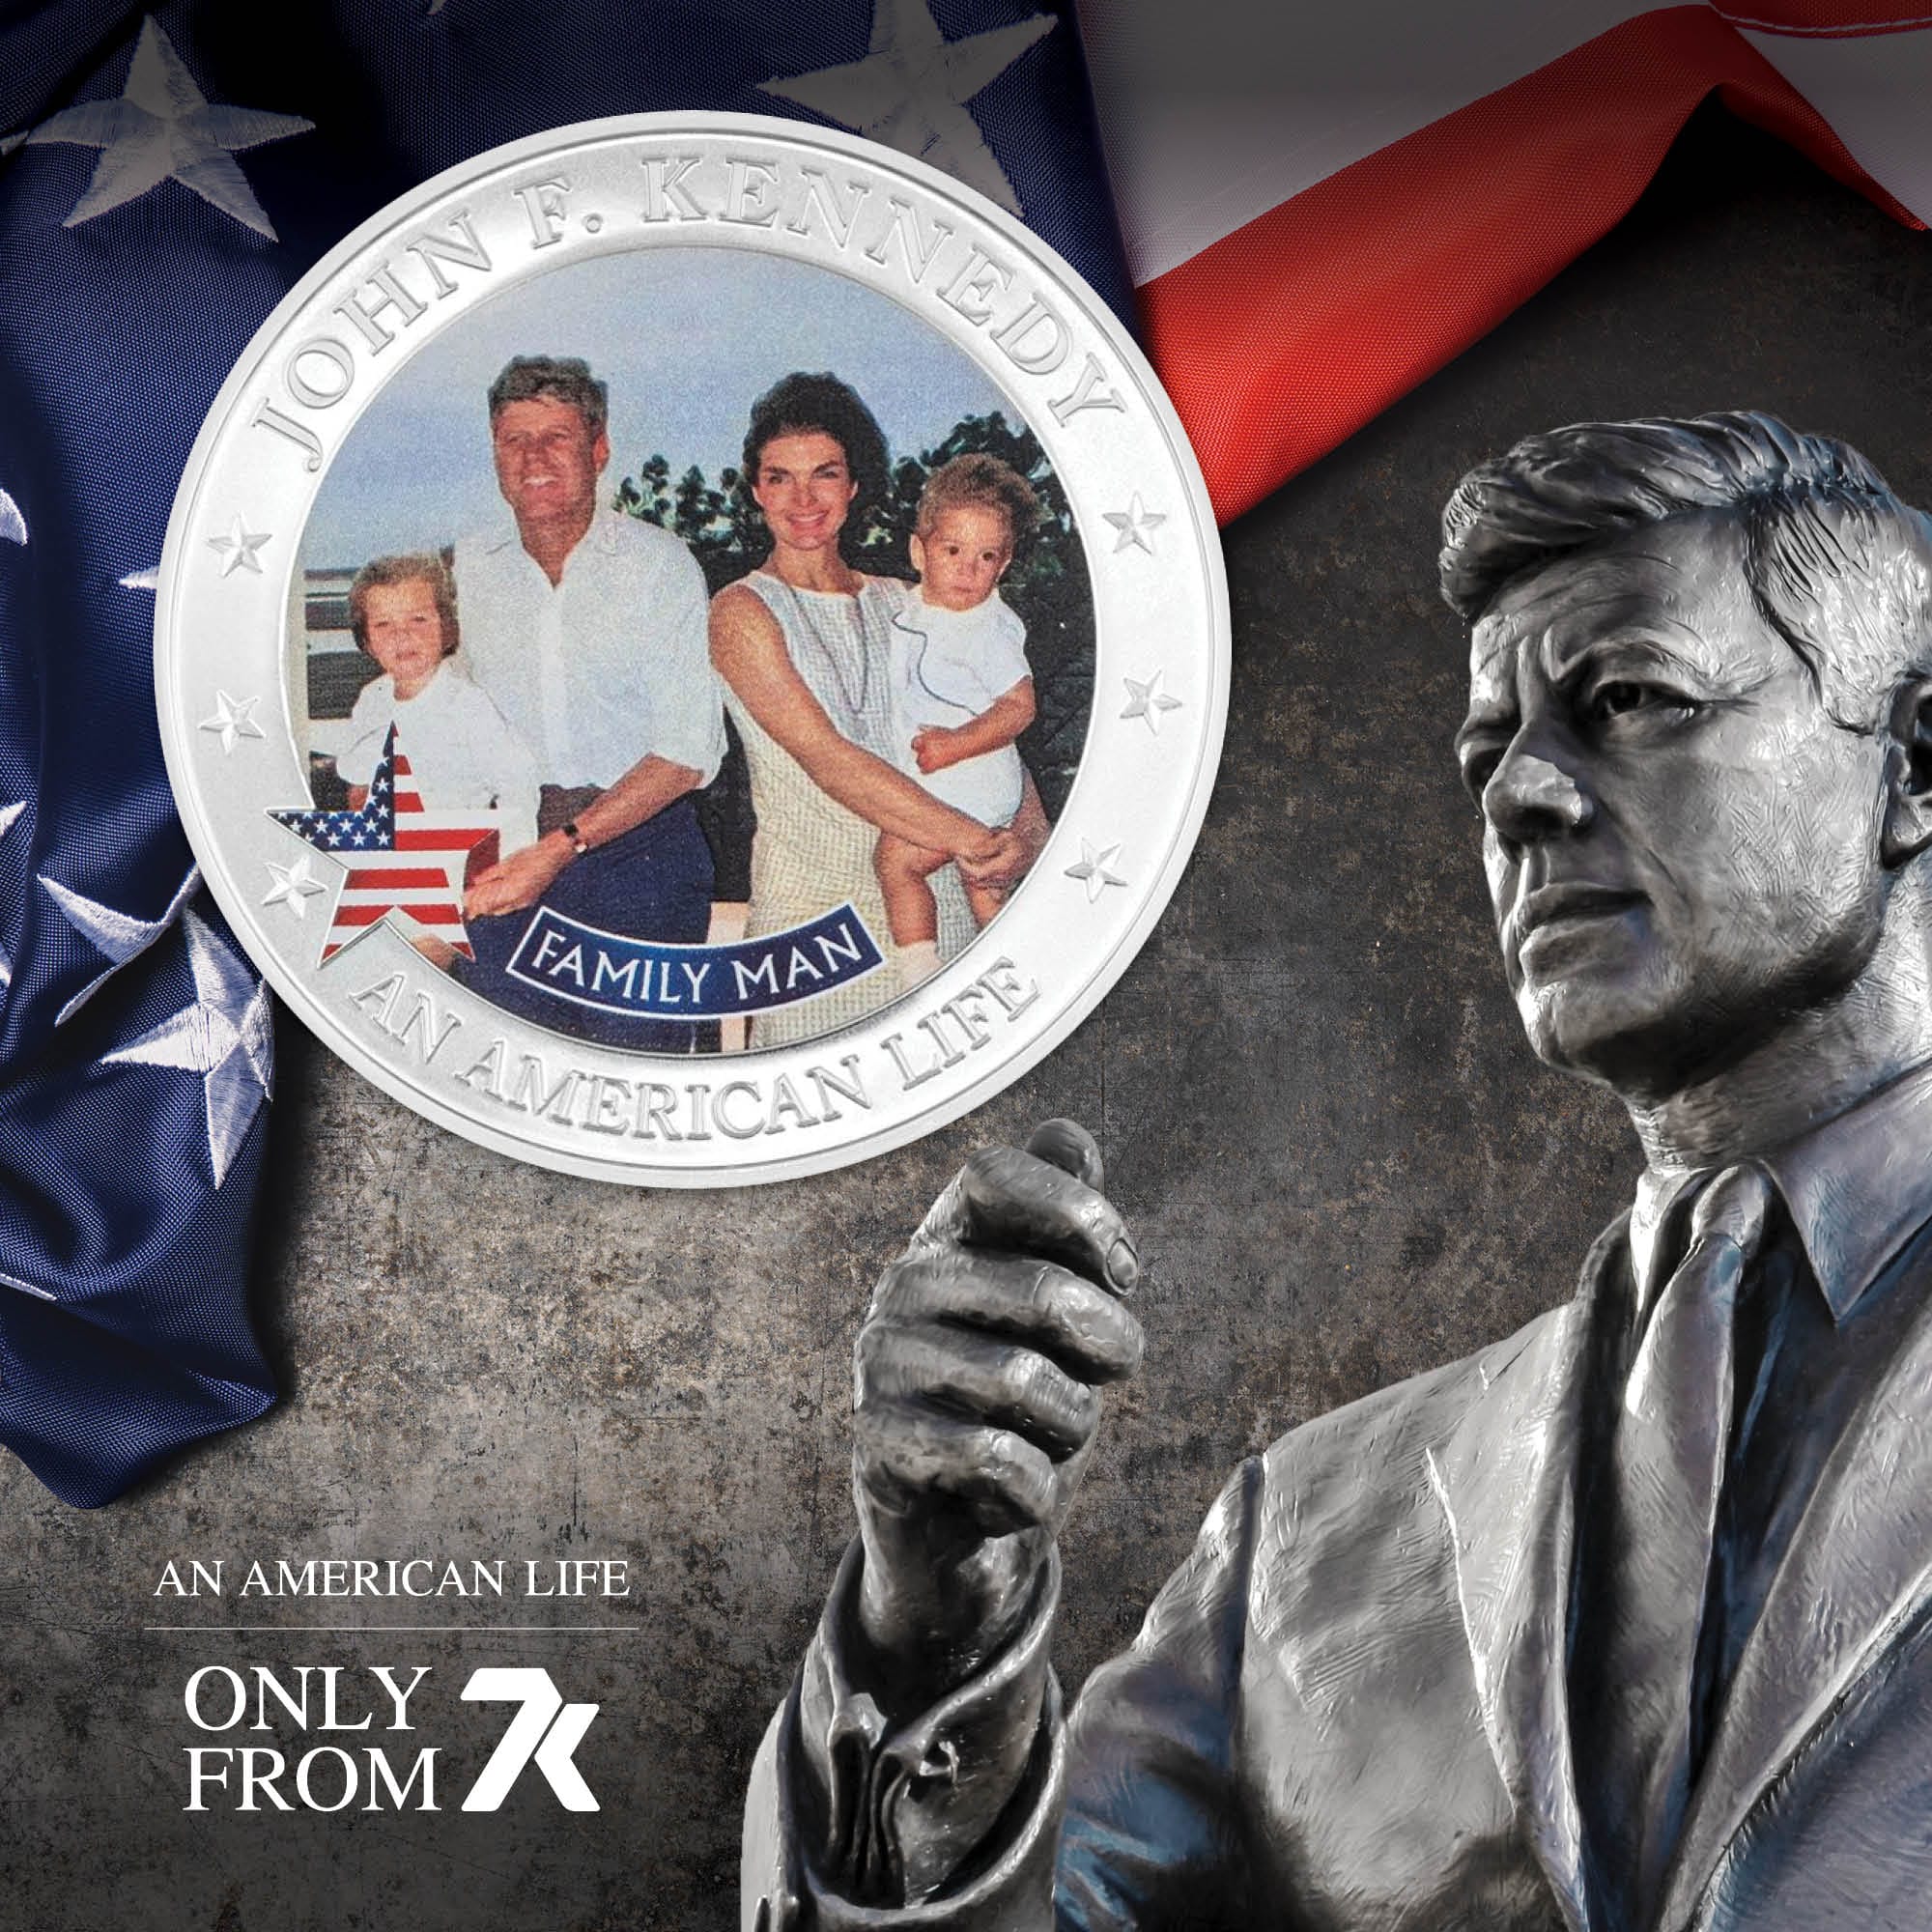 Life Of Kennedy Family Man 1/2 oz Silver Coin